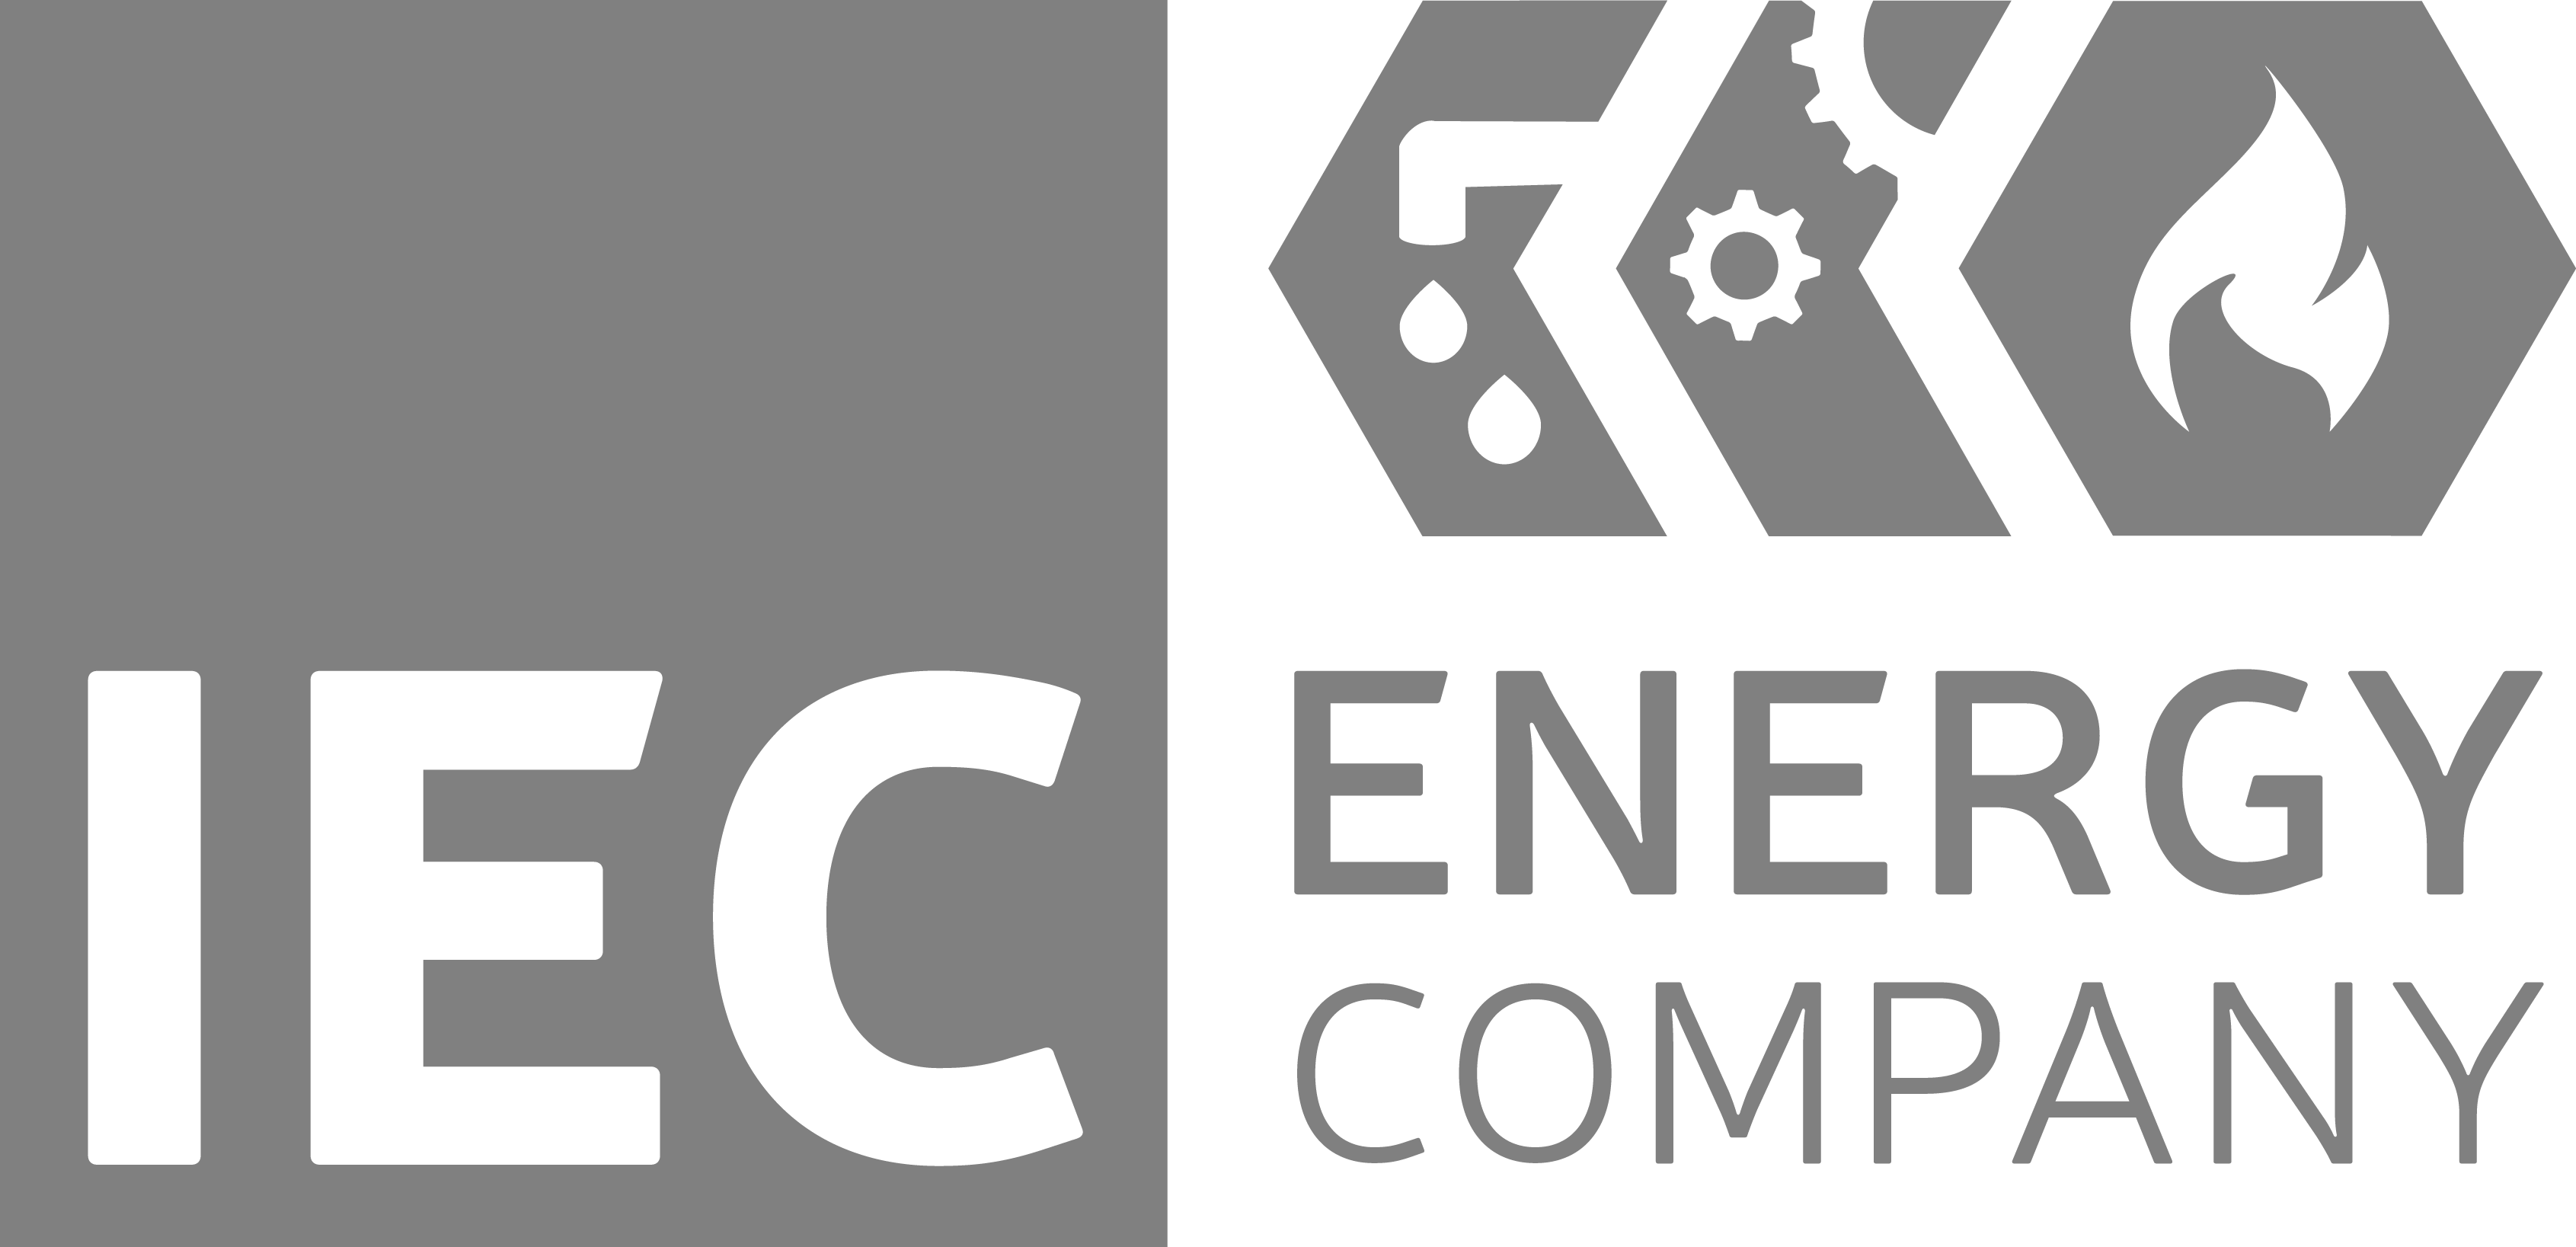 Interregional Energy Company Ltd.